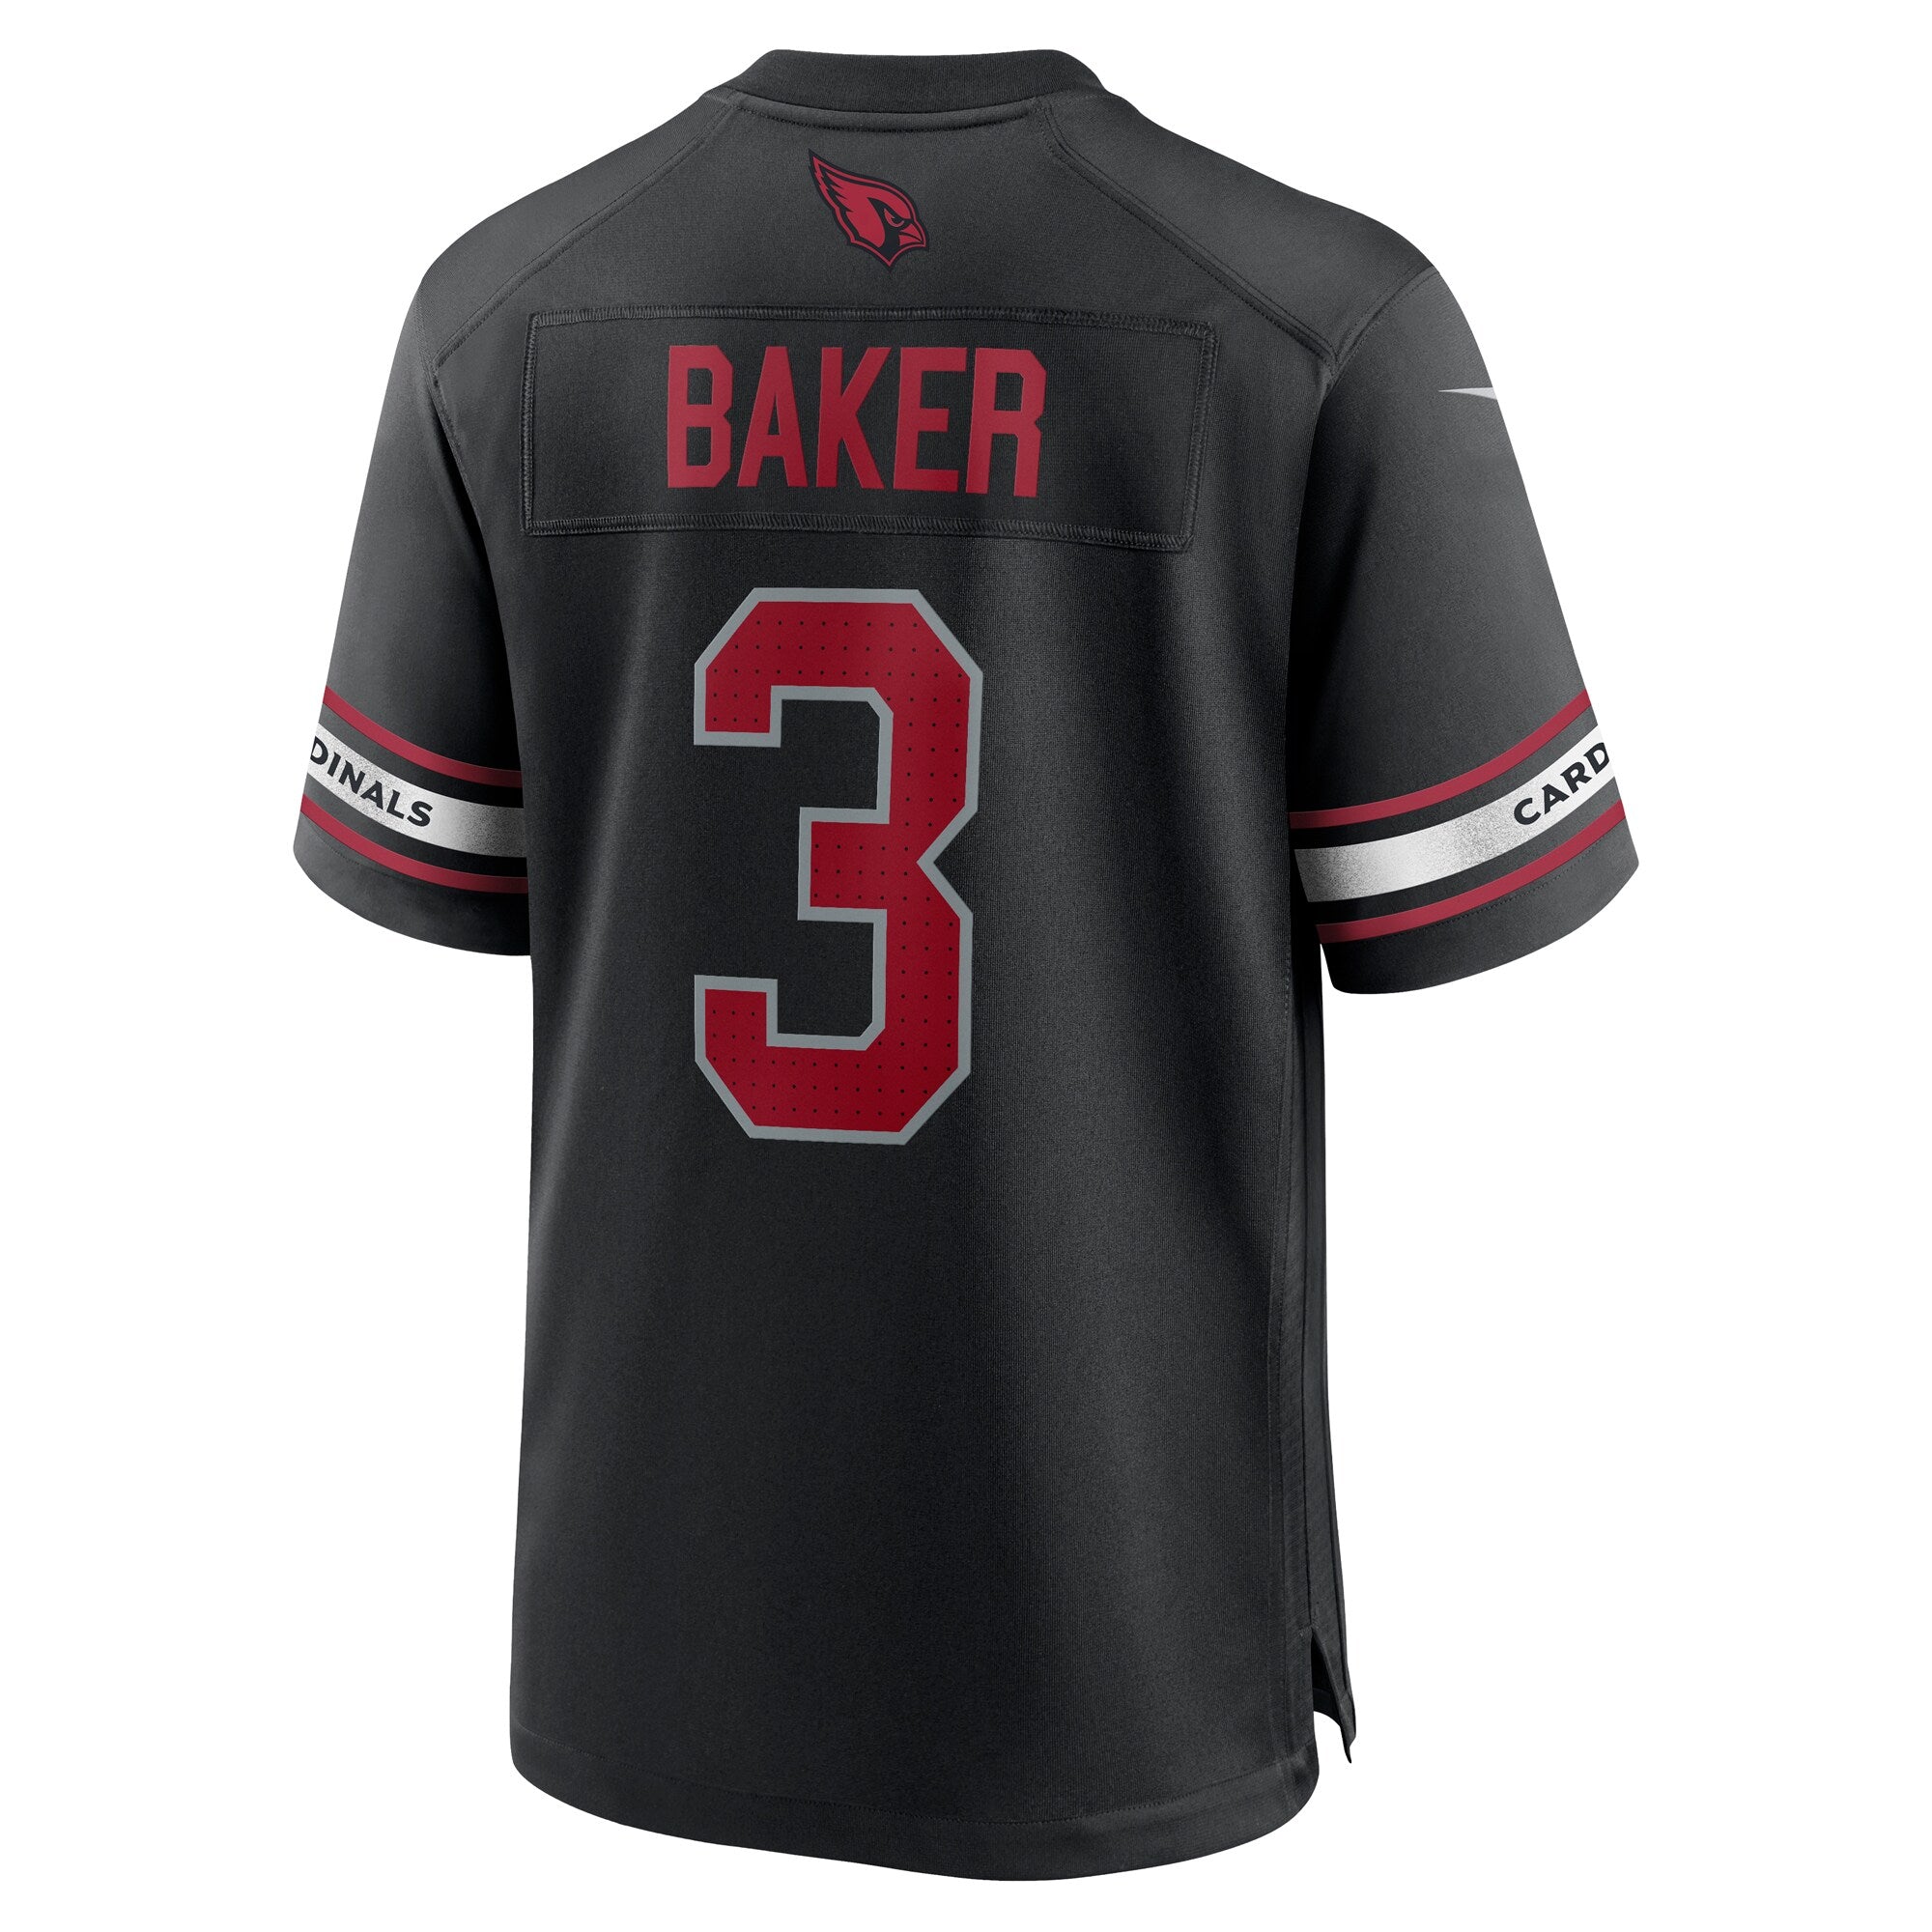 Baker Budda jersey